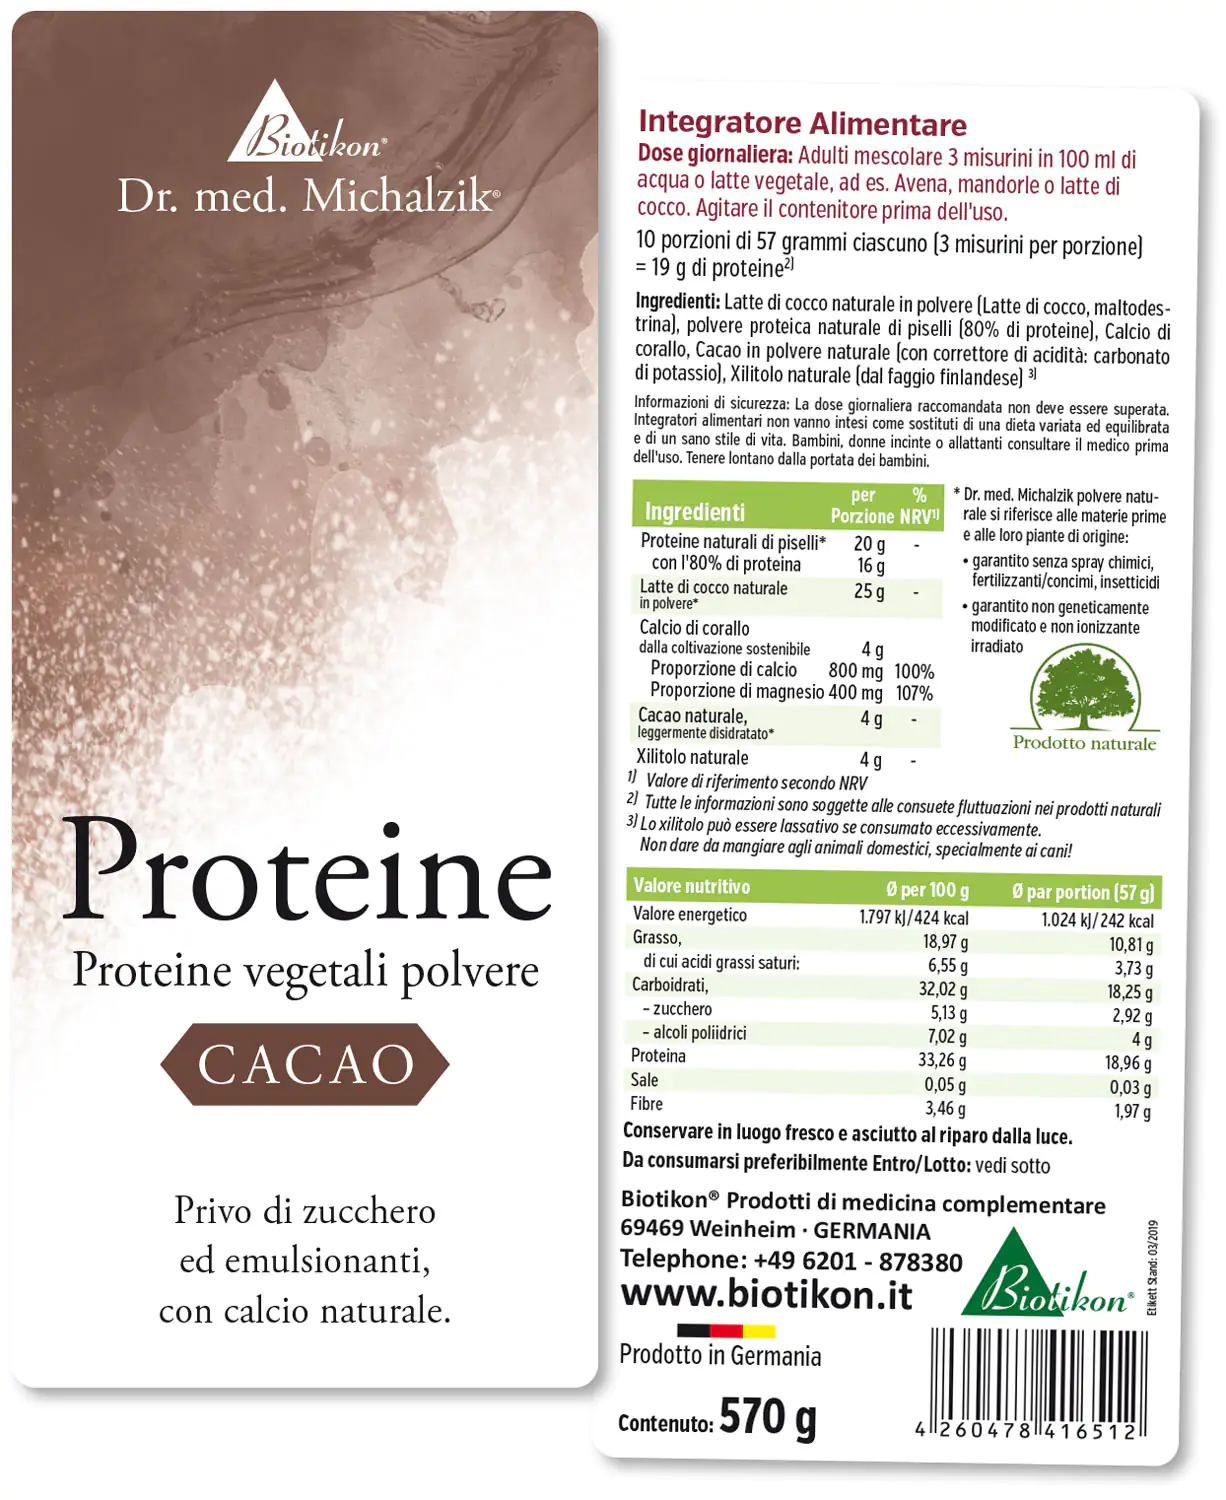 Proteine - 3-pack, Aronia + Cacao + Noce di cocco